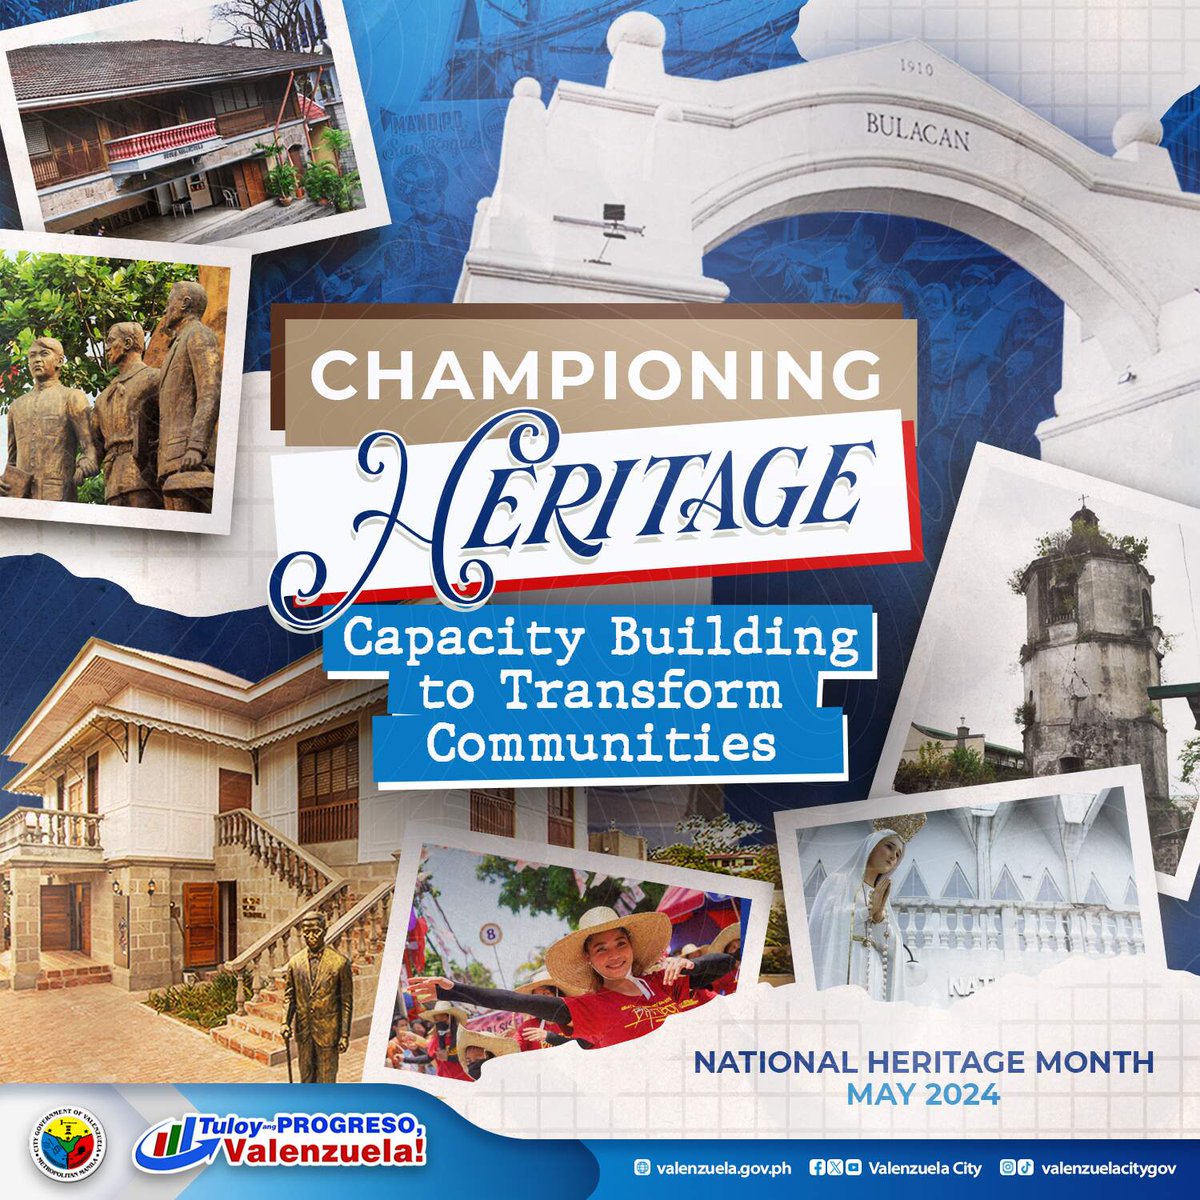 Ginugunita natin tuwing Mayo ang National Heritage Month! #NHM2024 #NationalHeritageMonth #NHMChampioningHeritage